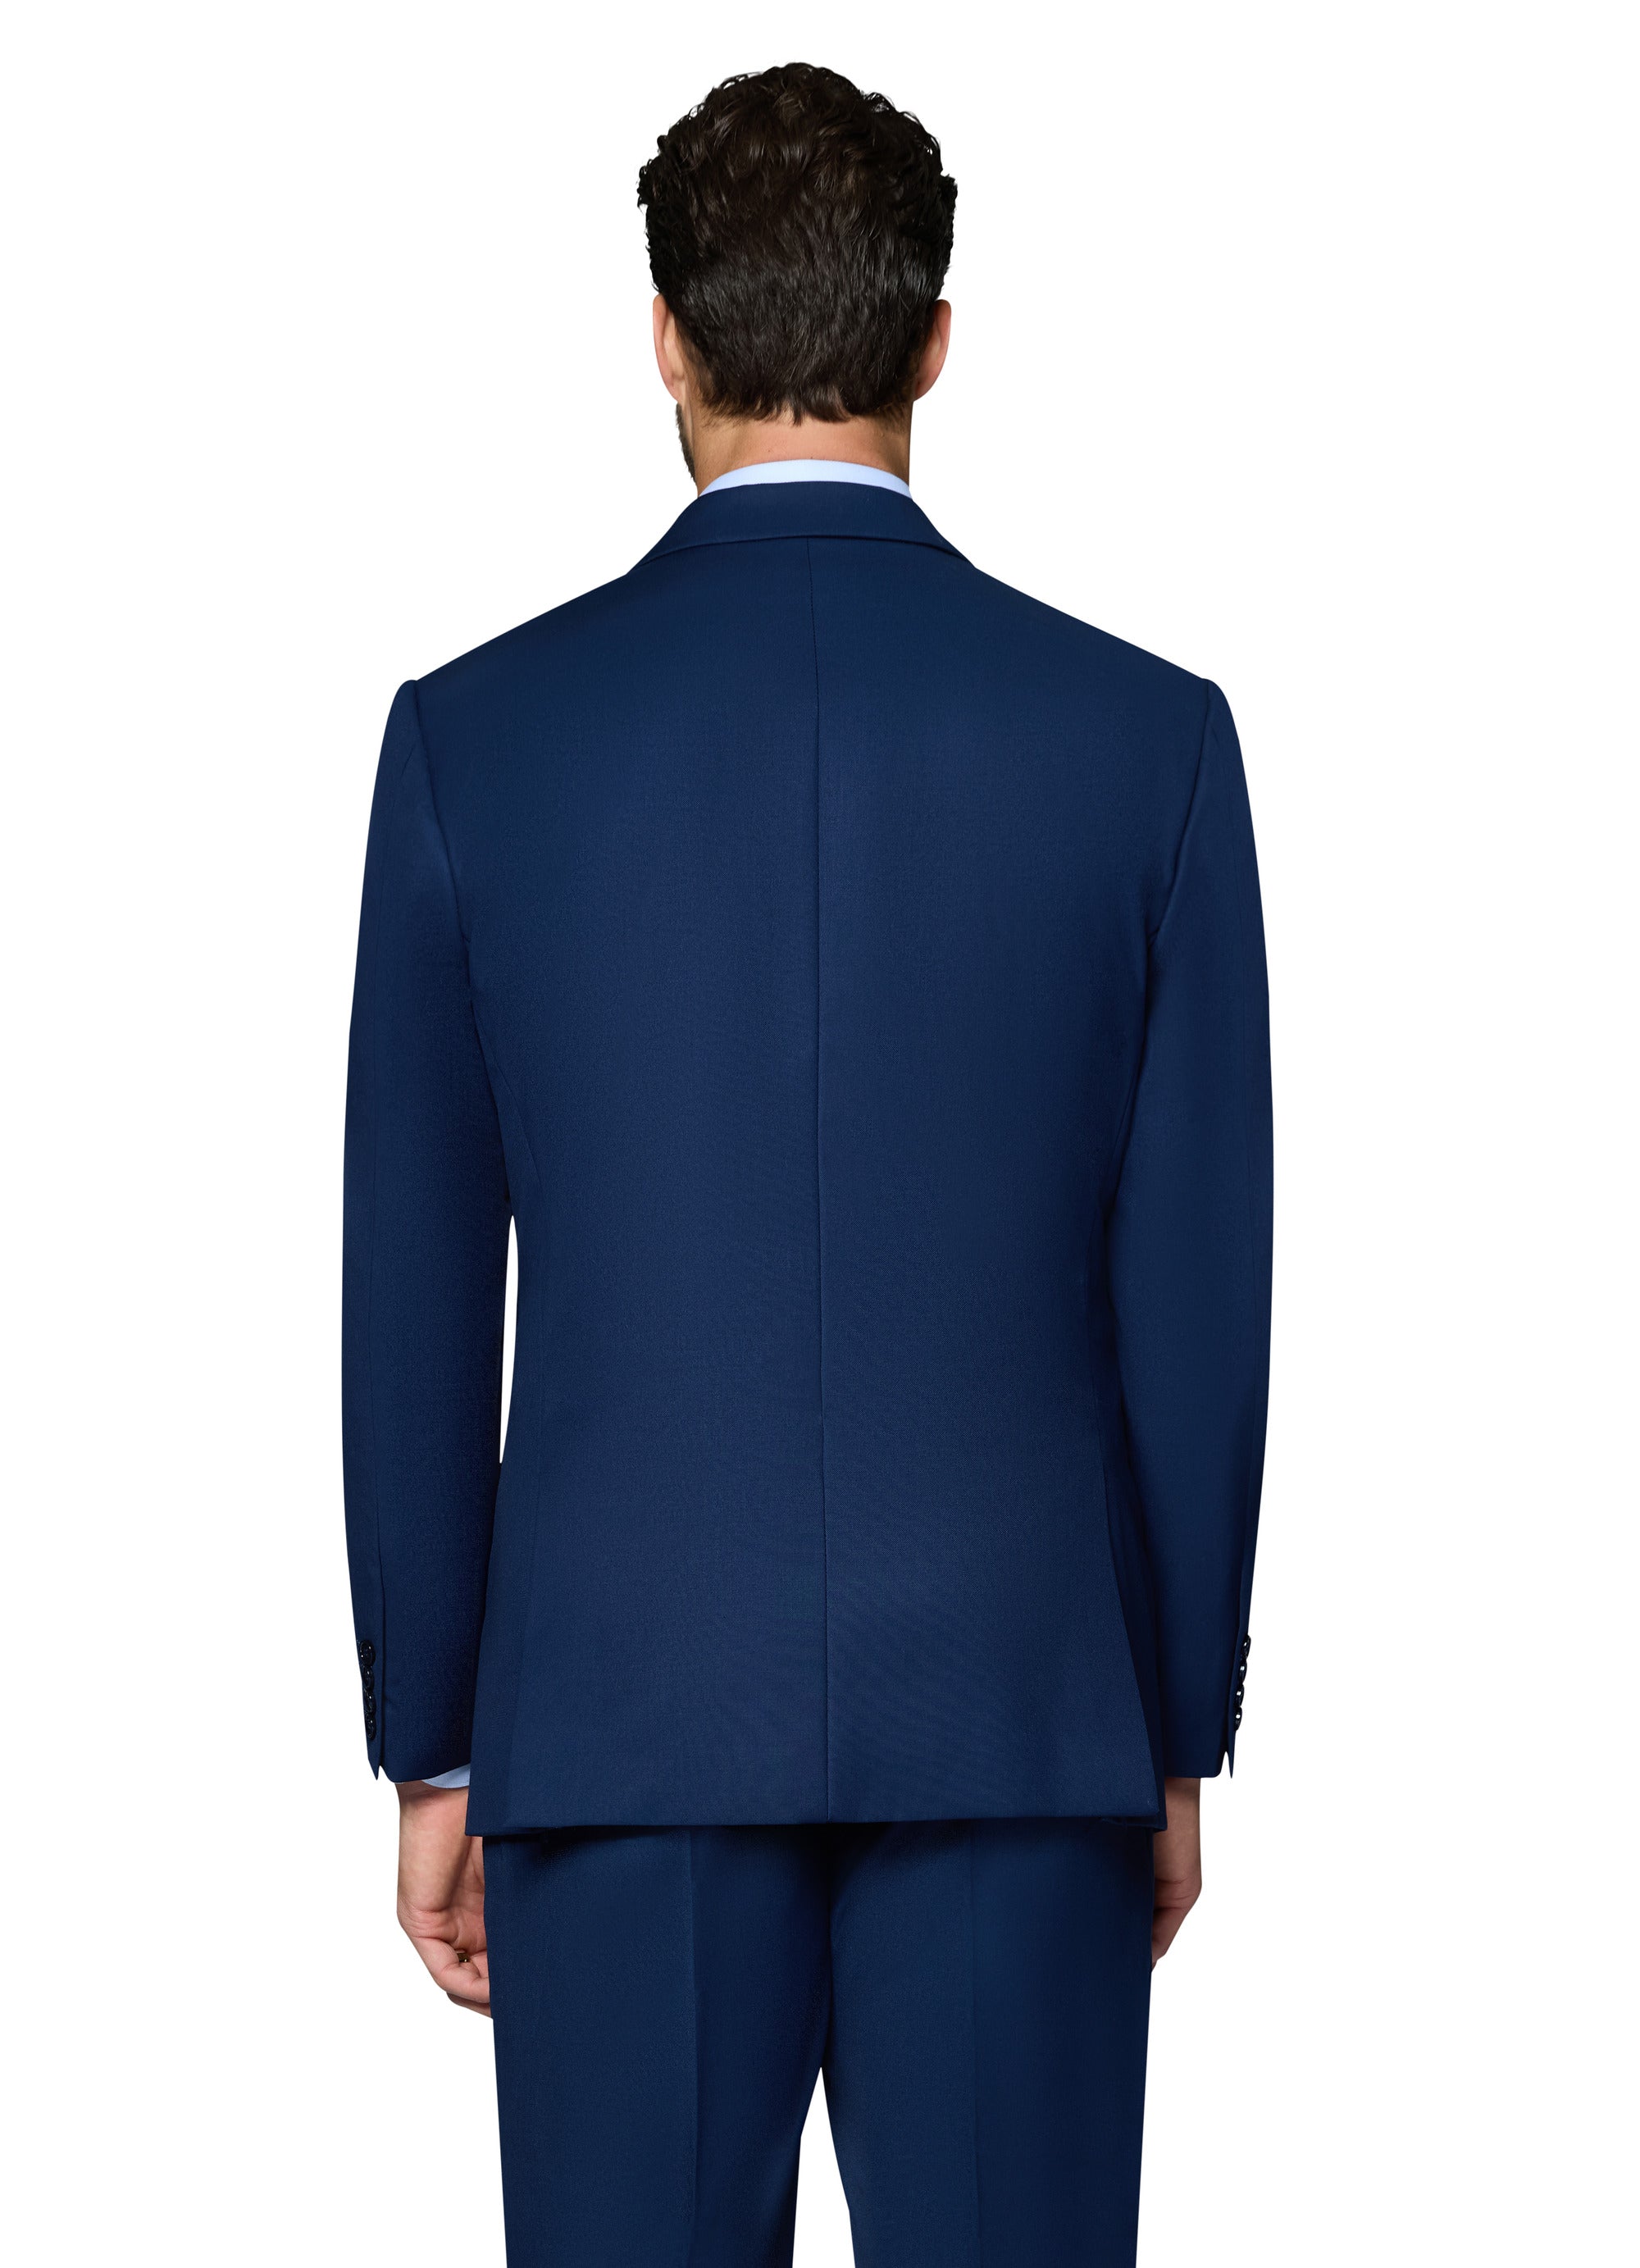 Berragamo Vested Solid New Blue Modern Fit